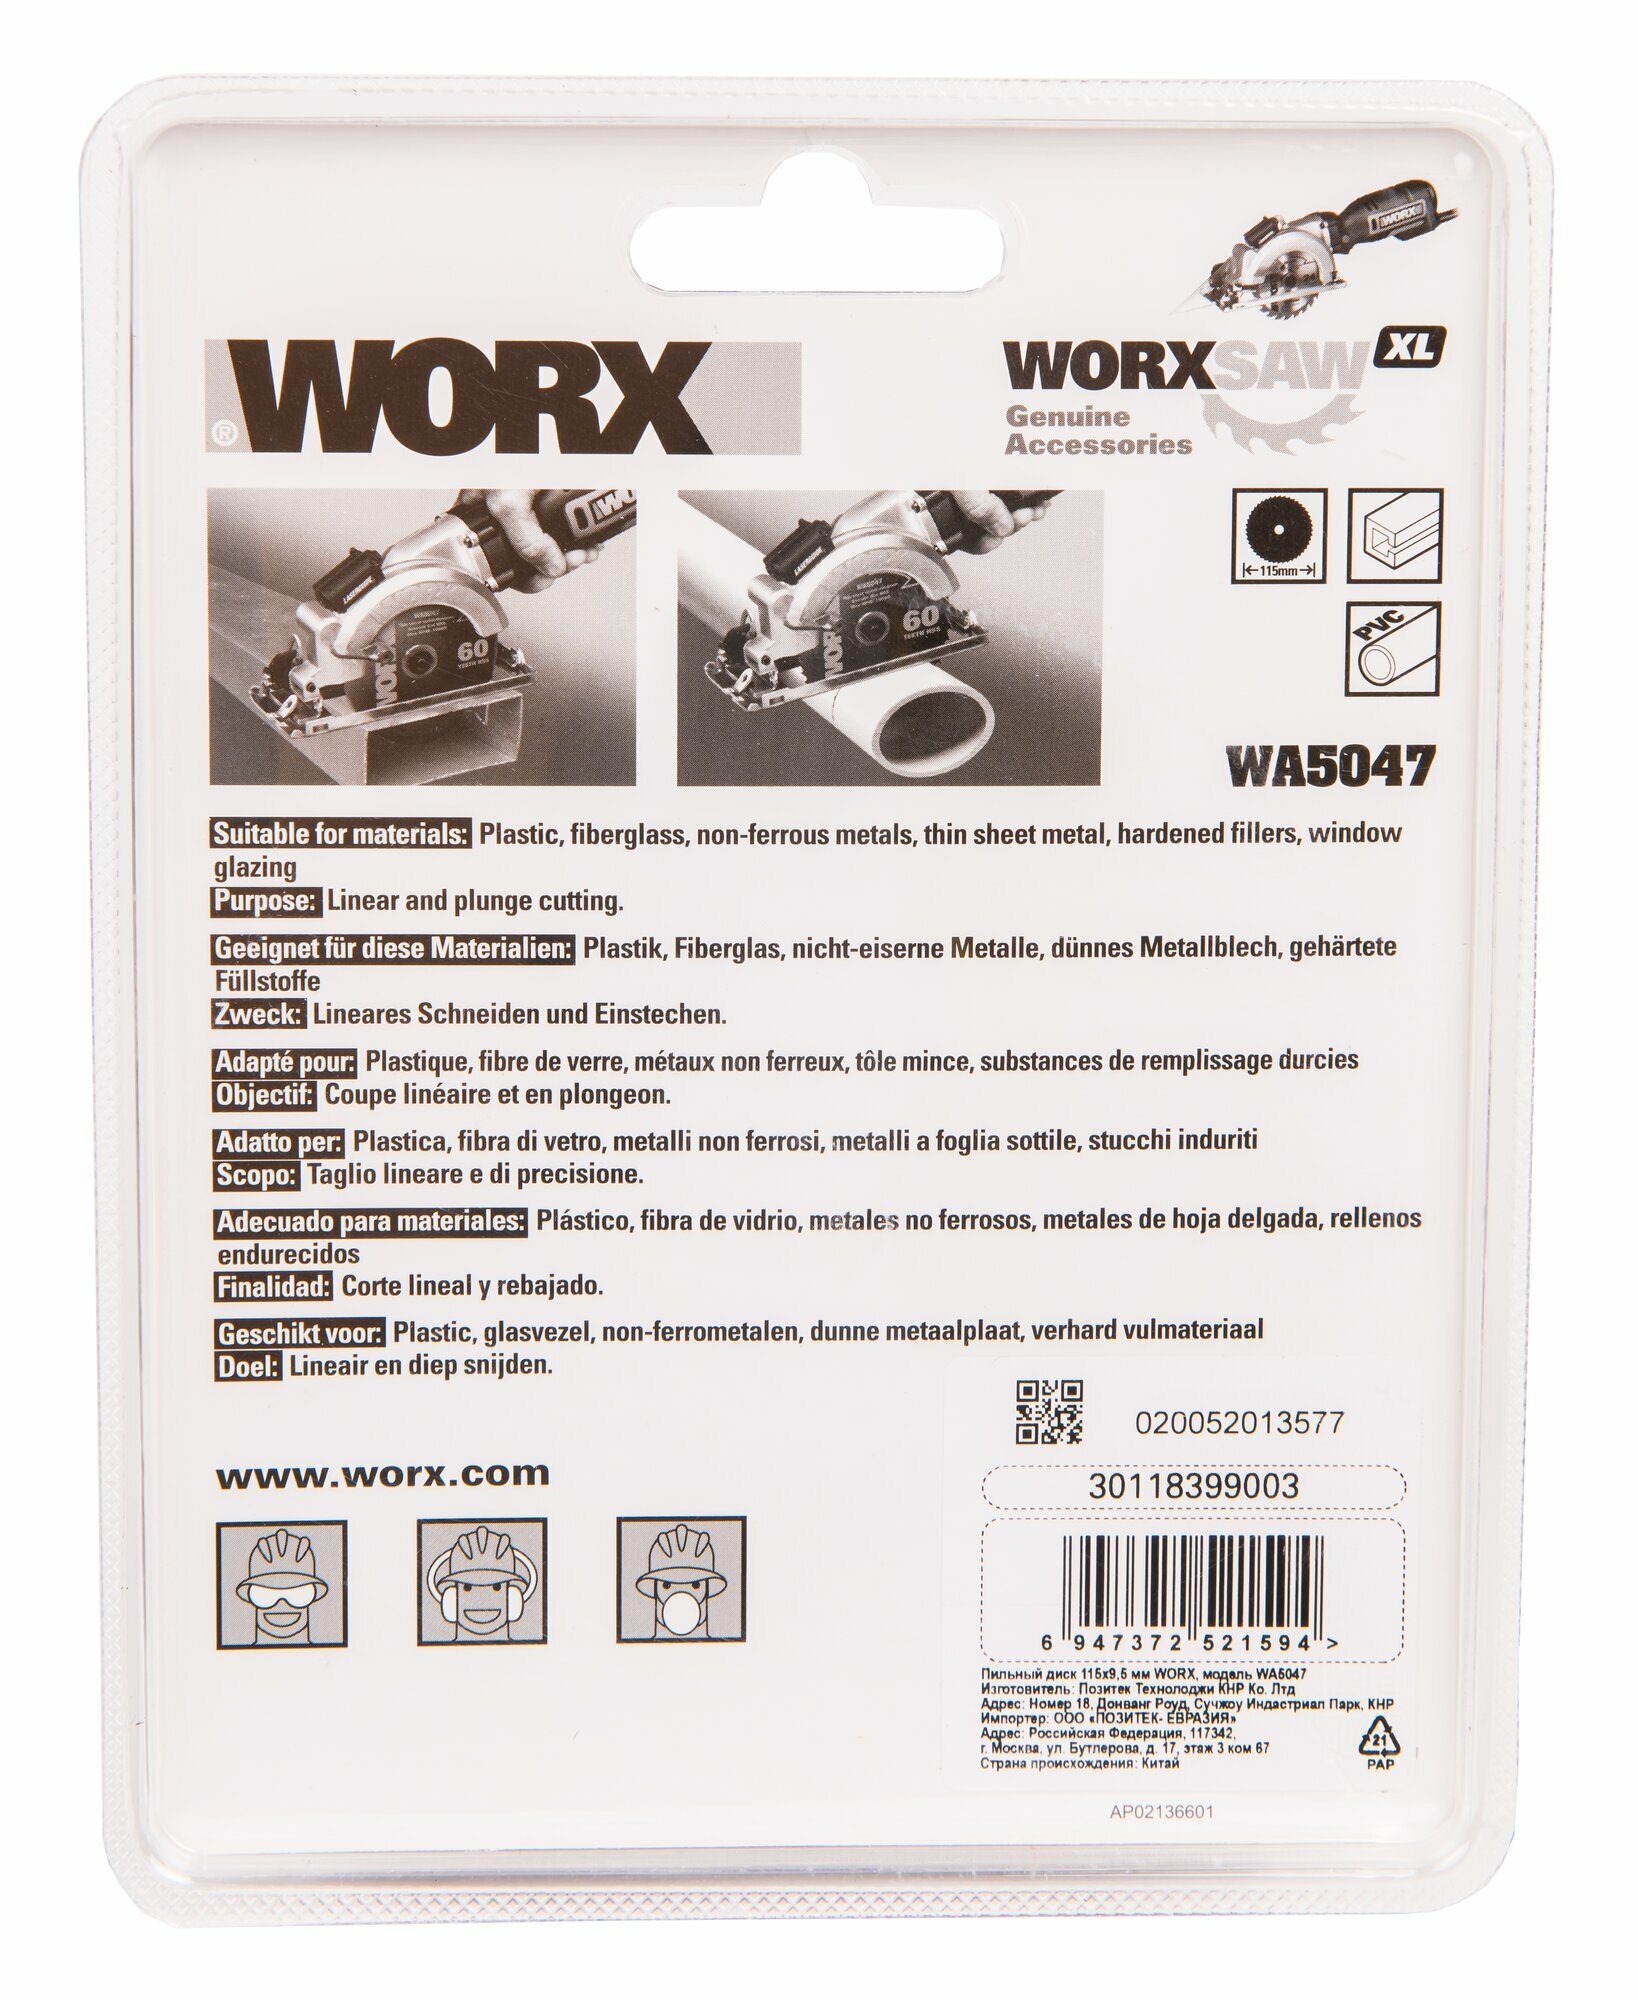 Пильный диск по металлу WORX WA5047, 60T HSS 115х1,2х9,5 мм